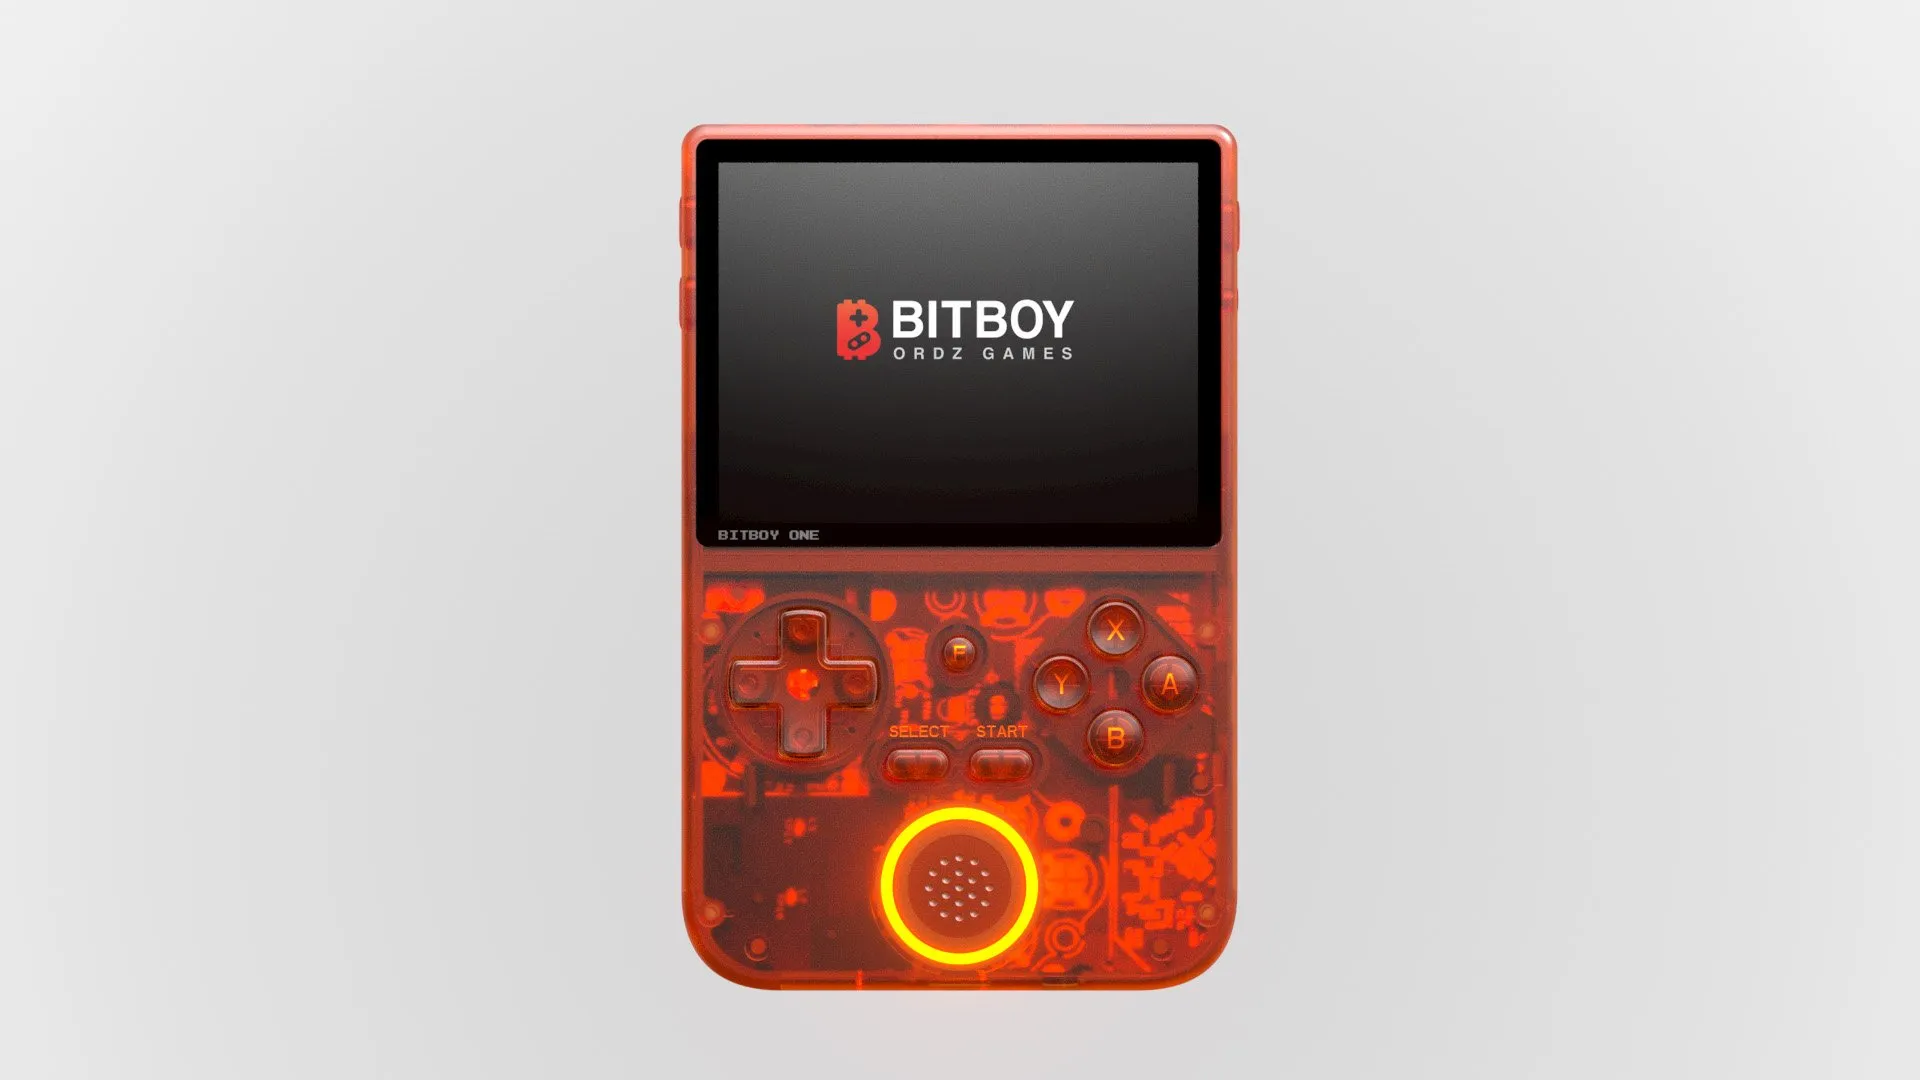 The BitBoy One gaming handheld